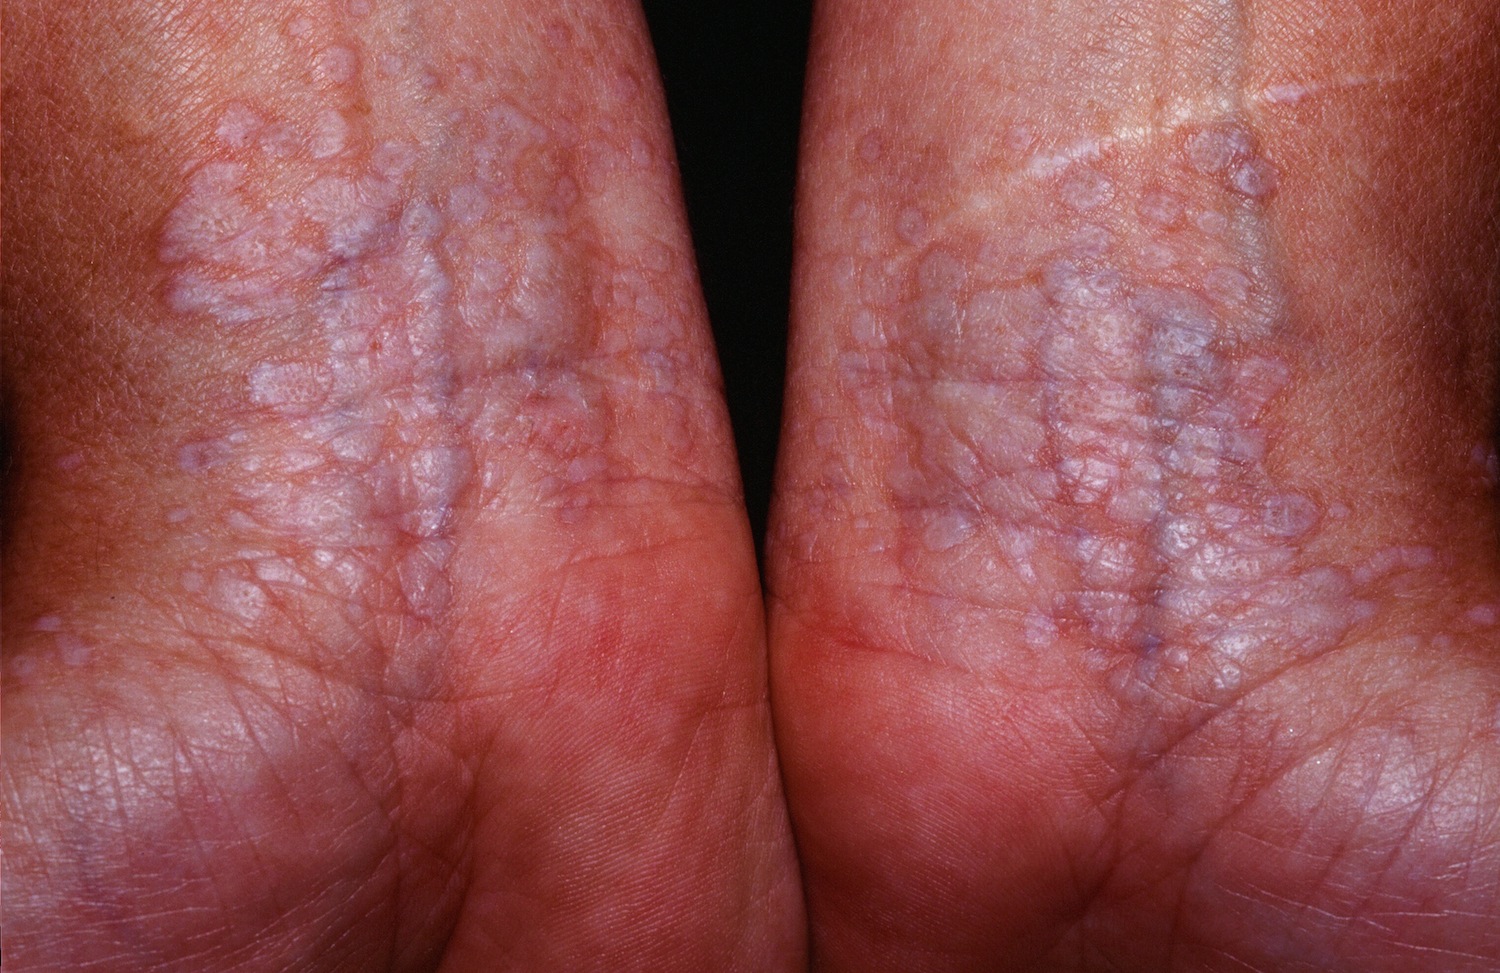 lichen sclerosus